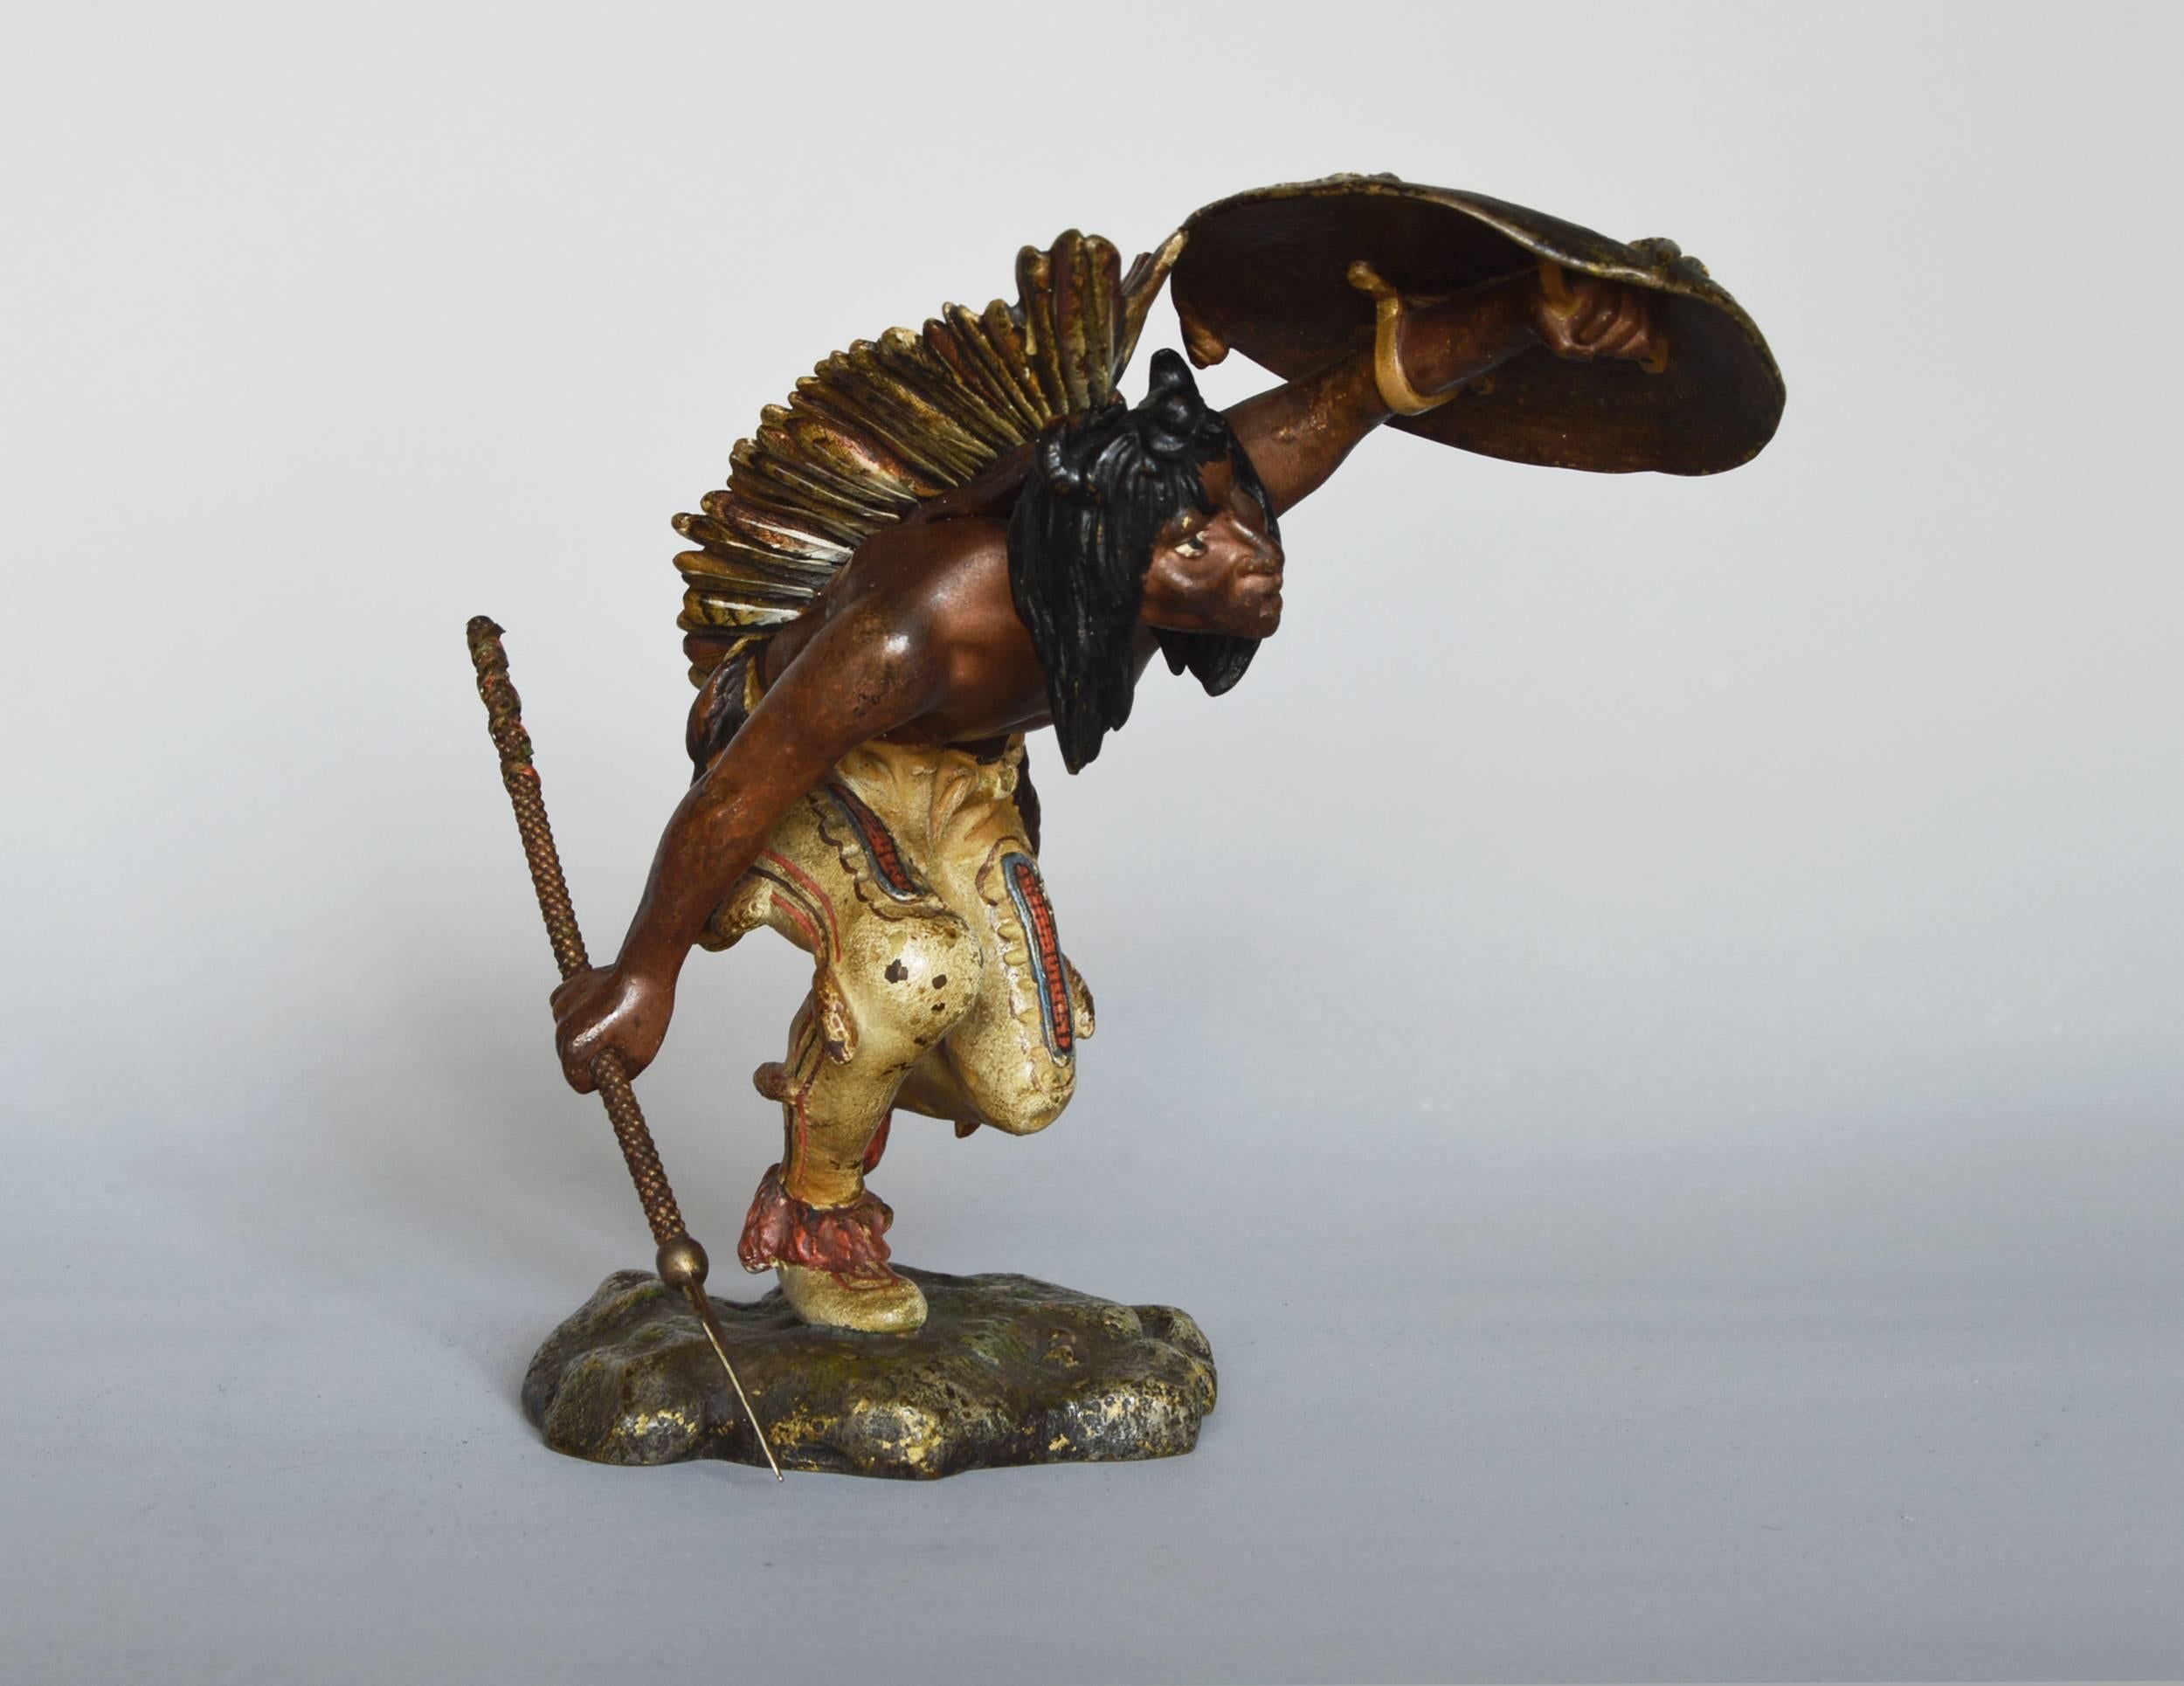 Native American Indian Crouching, bronze sculpture - Gold Figurative Sculpture by Franz Bergmann